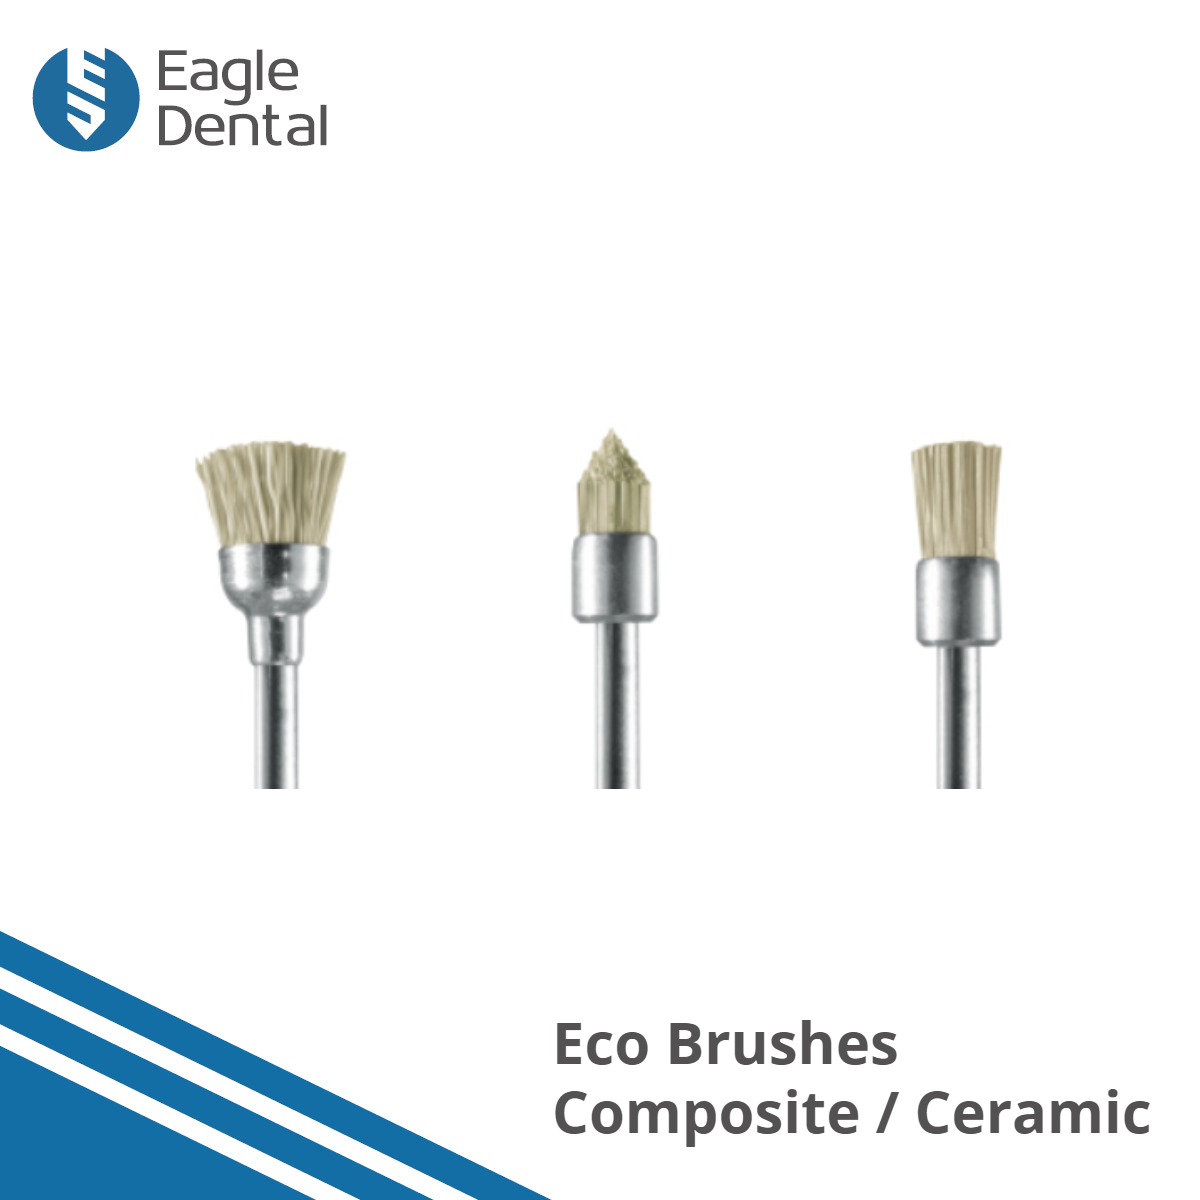 Dental composite brushes